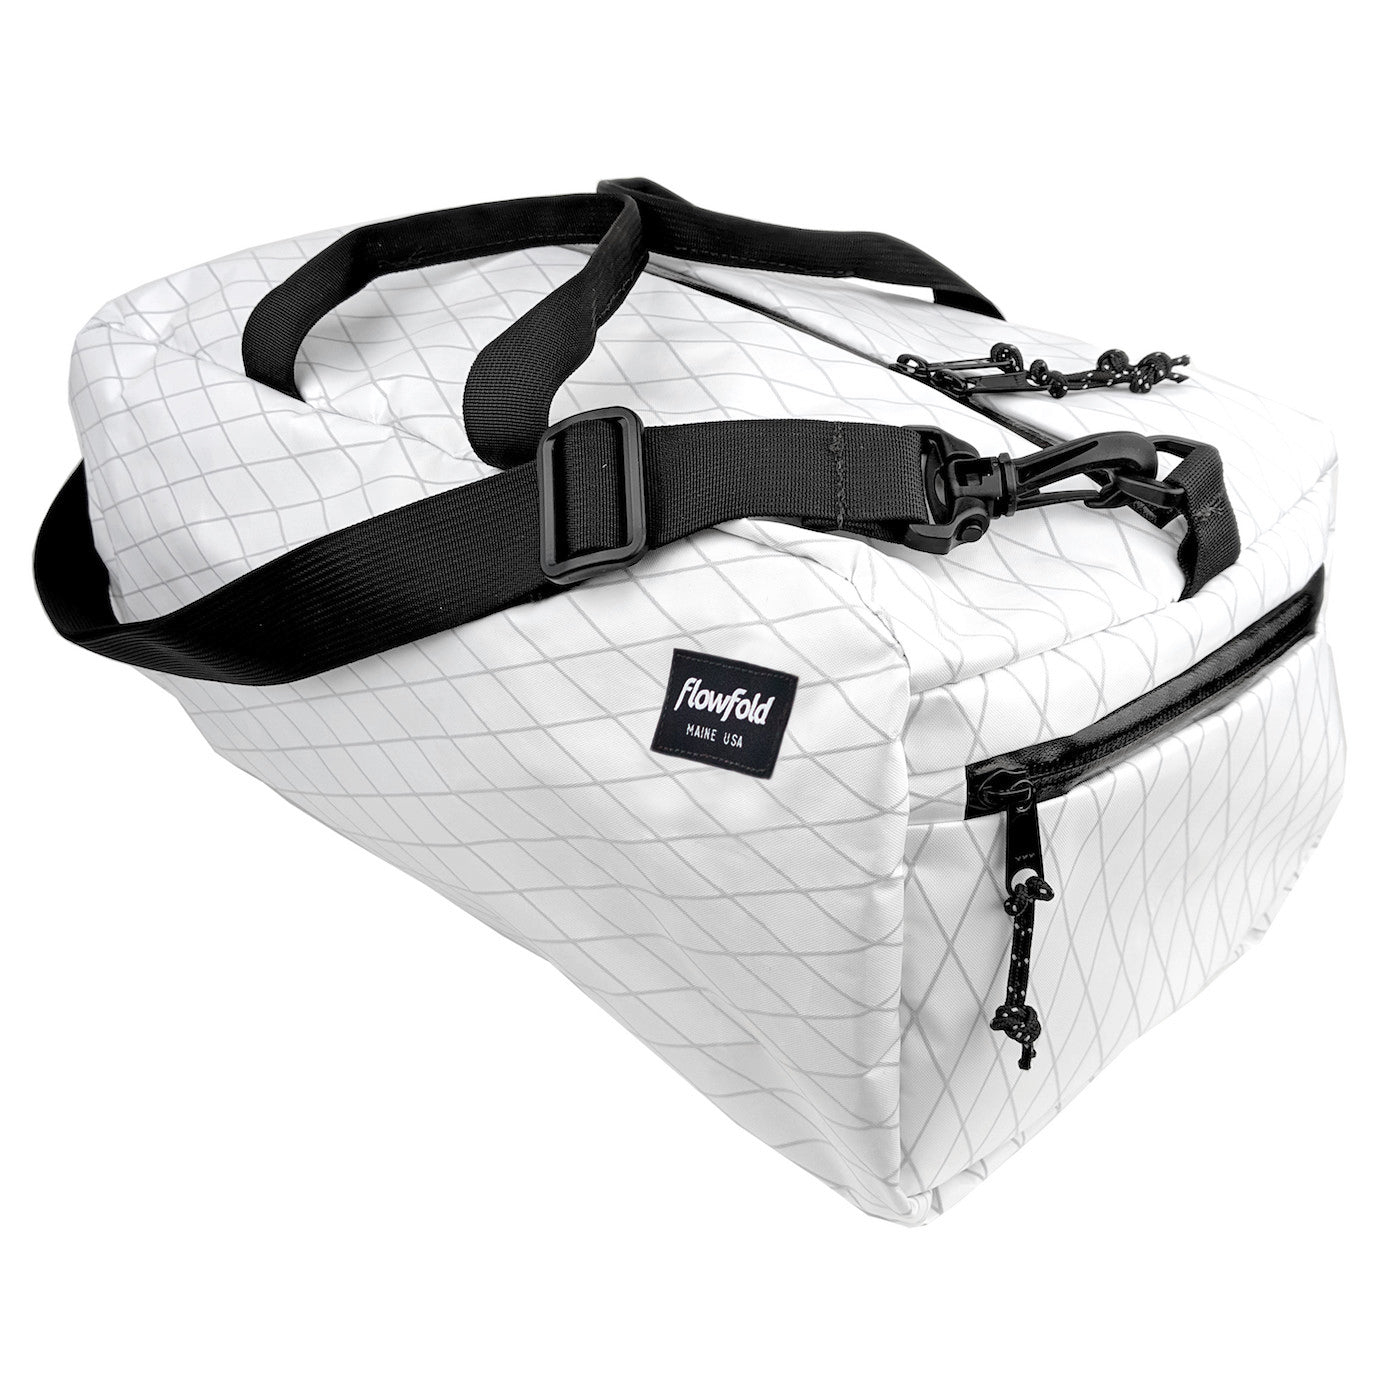 Flowfold Custom Nomad 24L Packable Duffle Bag 